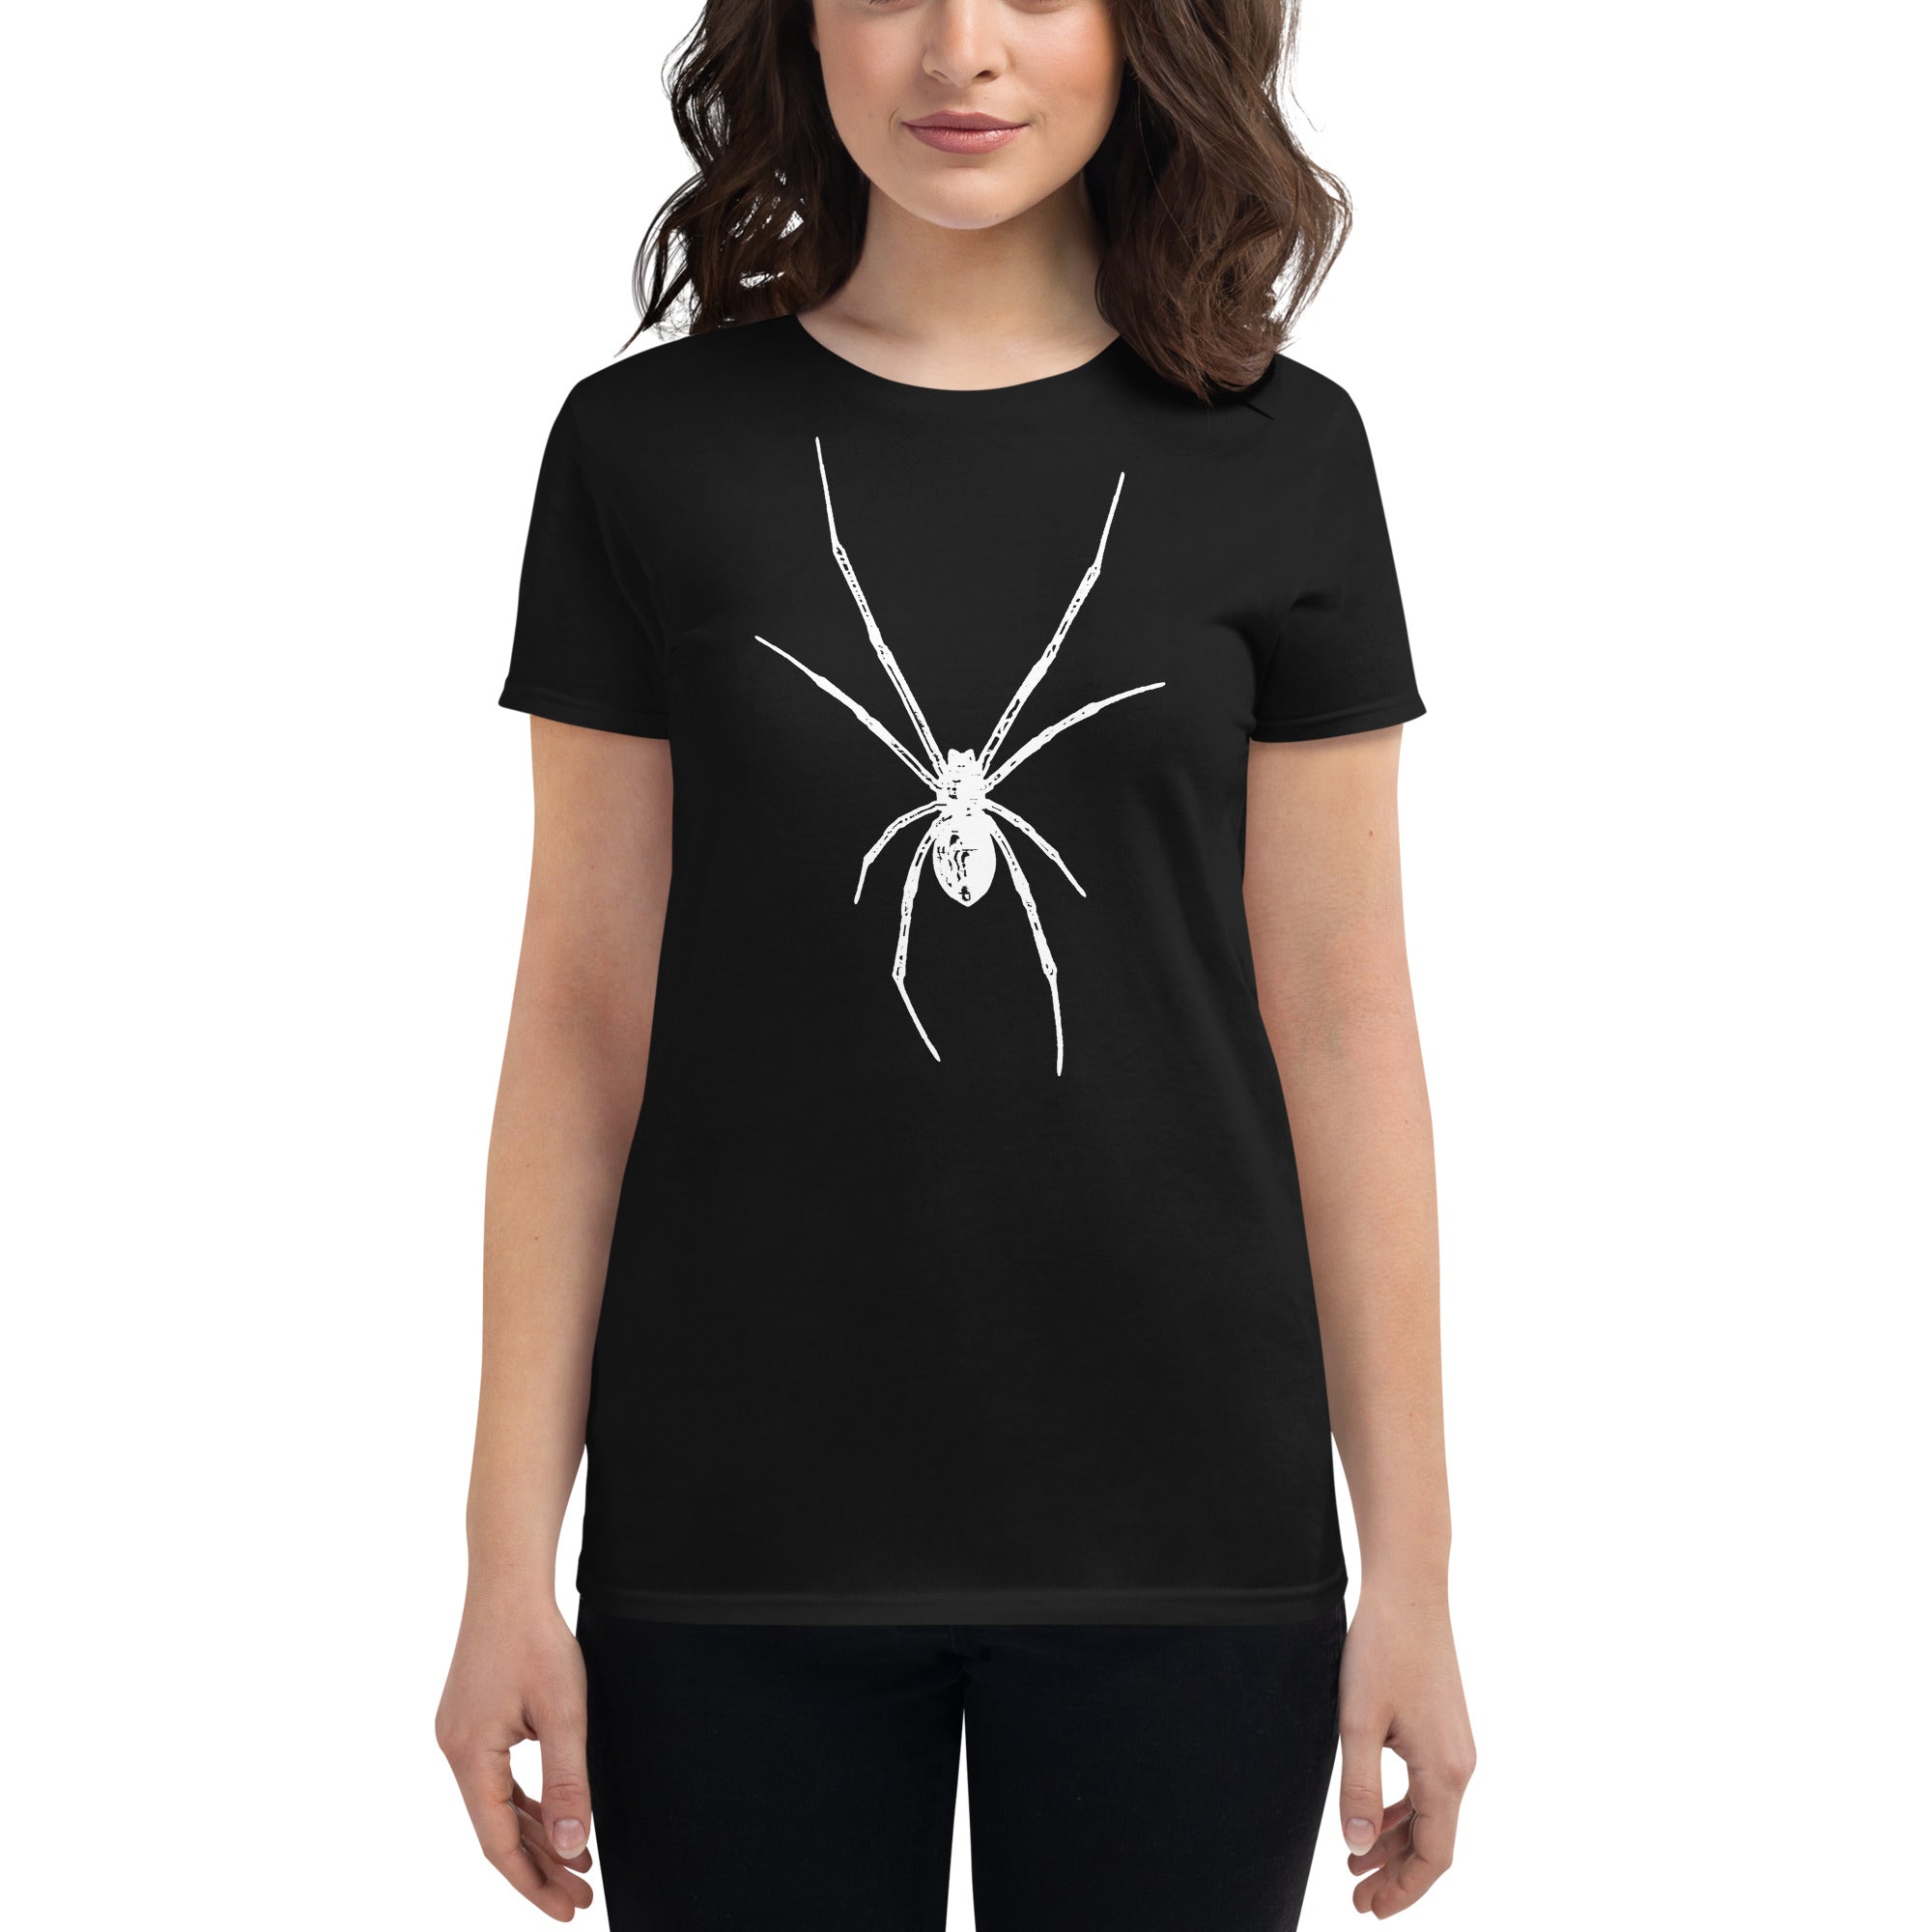 White Creepy Spider Arachnid Black Widow Women's Short Sleeve Babydoll T-shirt